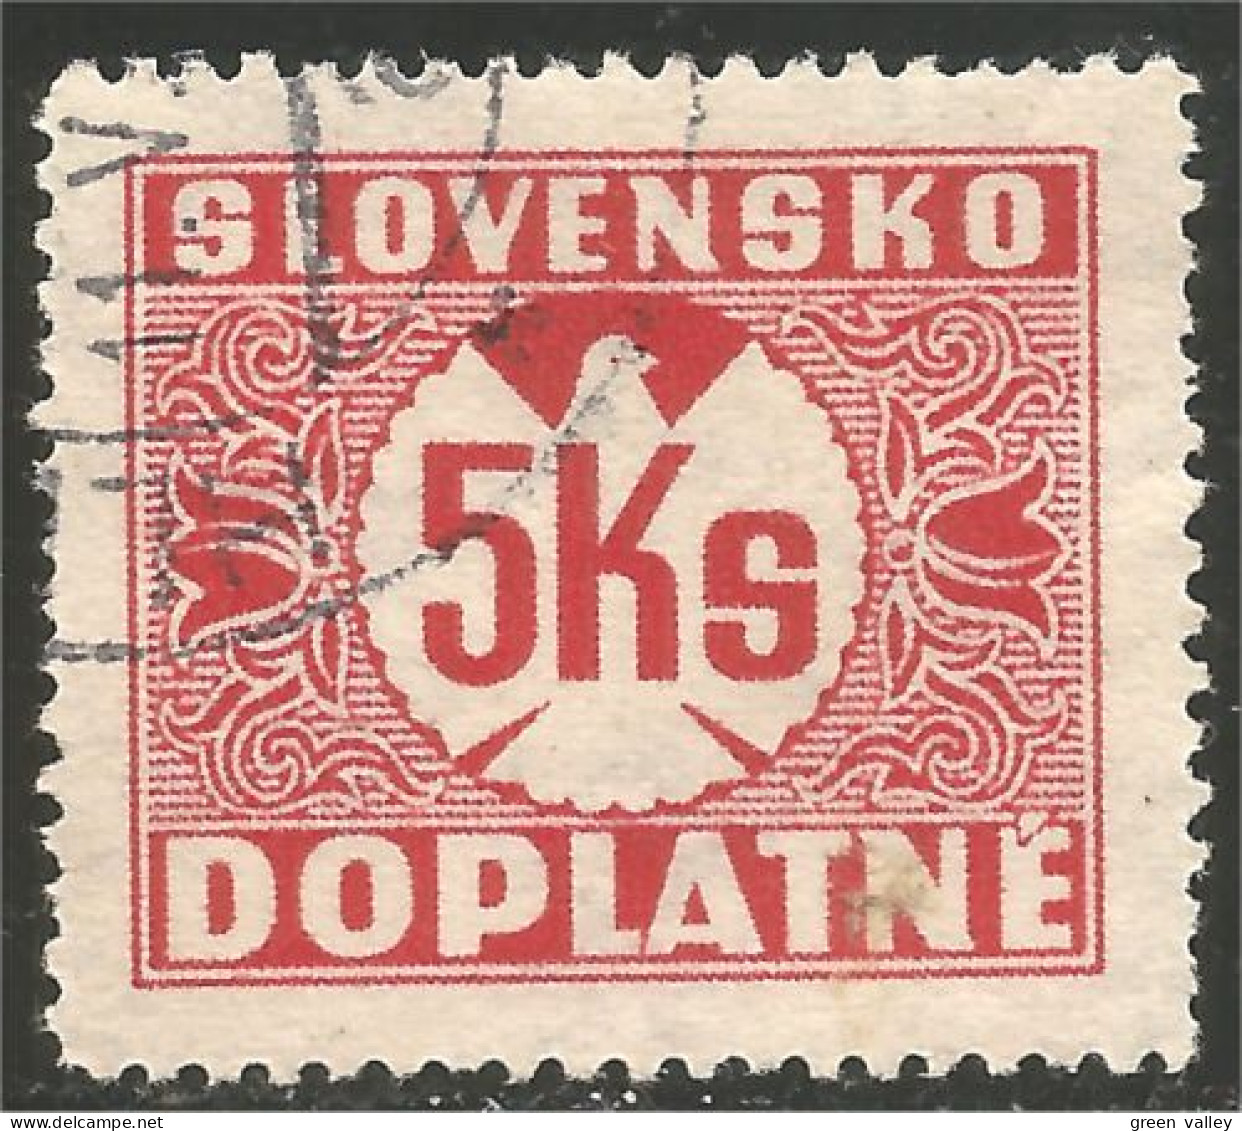 810 Slovensko Slovakia 1941 Postage Due Taxe 5 Ks Carmine (SLK-58c) - Oblitérés